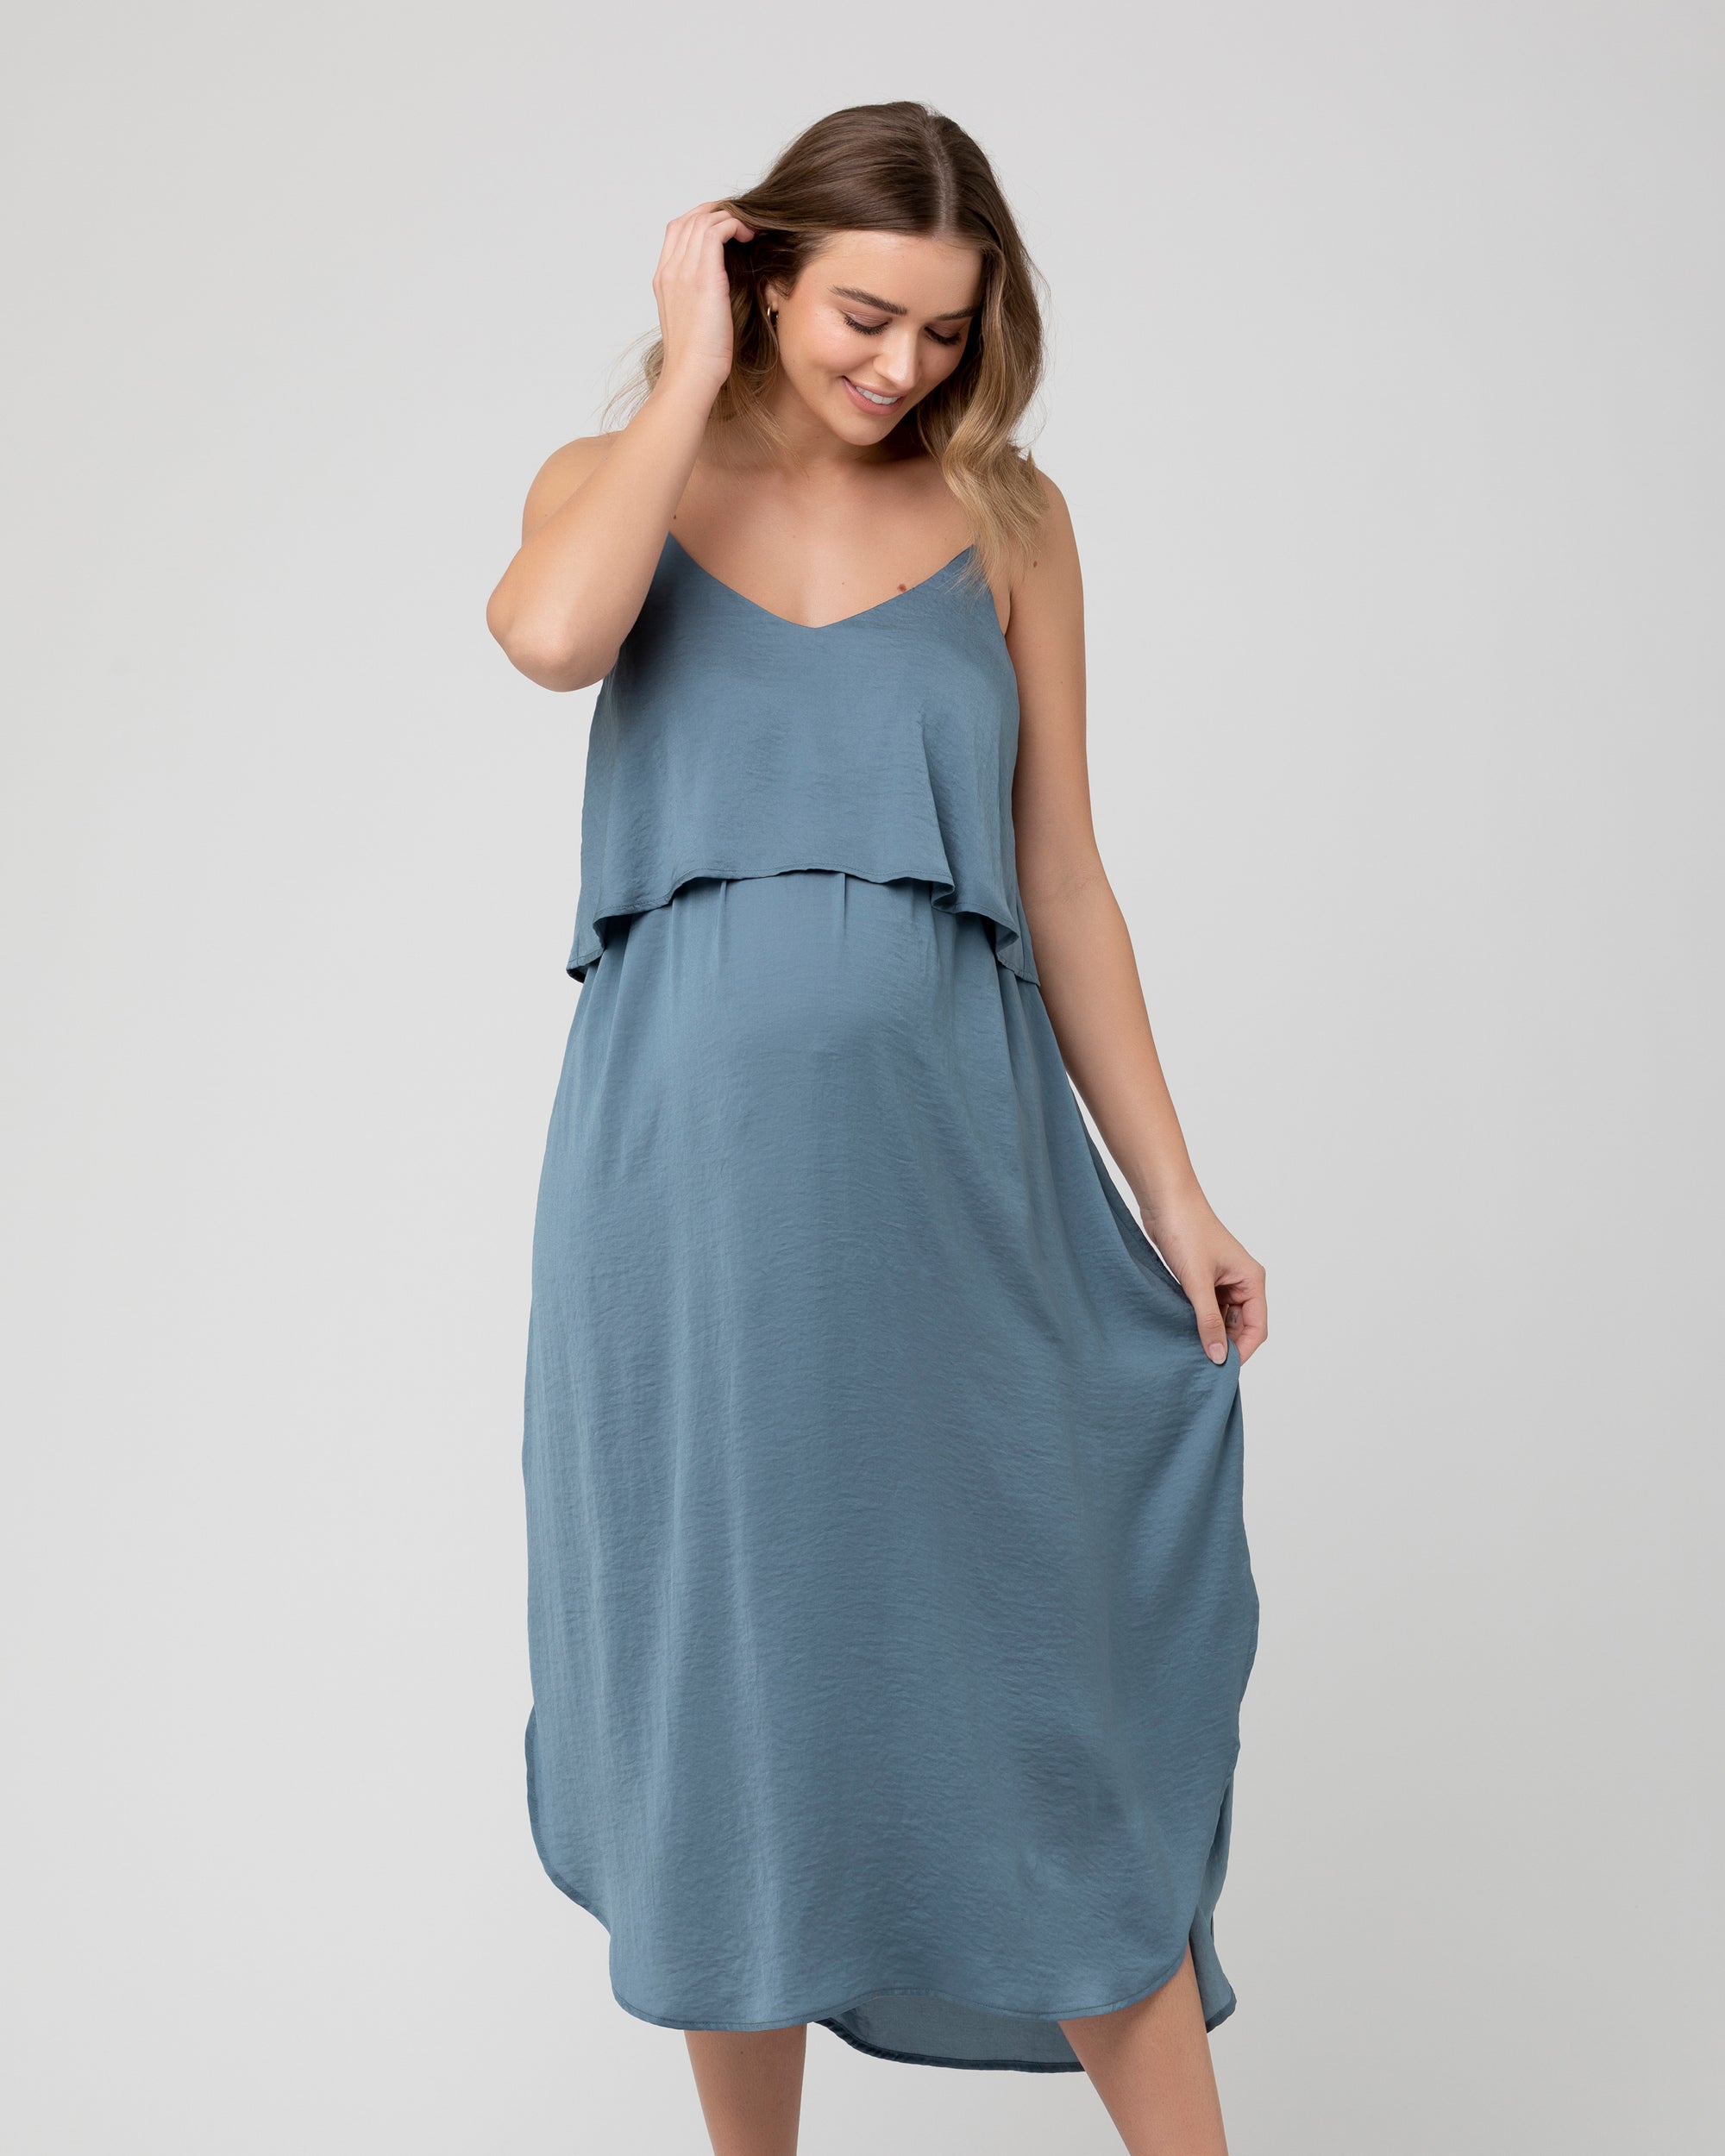 Loose Nursing Slip Dress with Breast Pad Maternity Underwear size